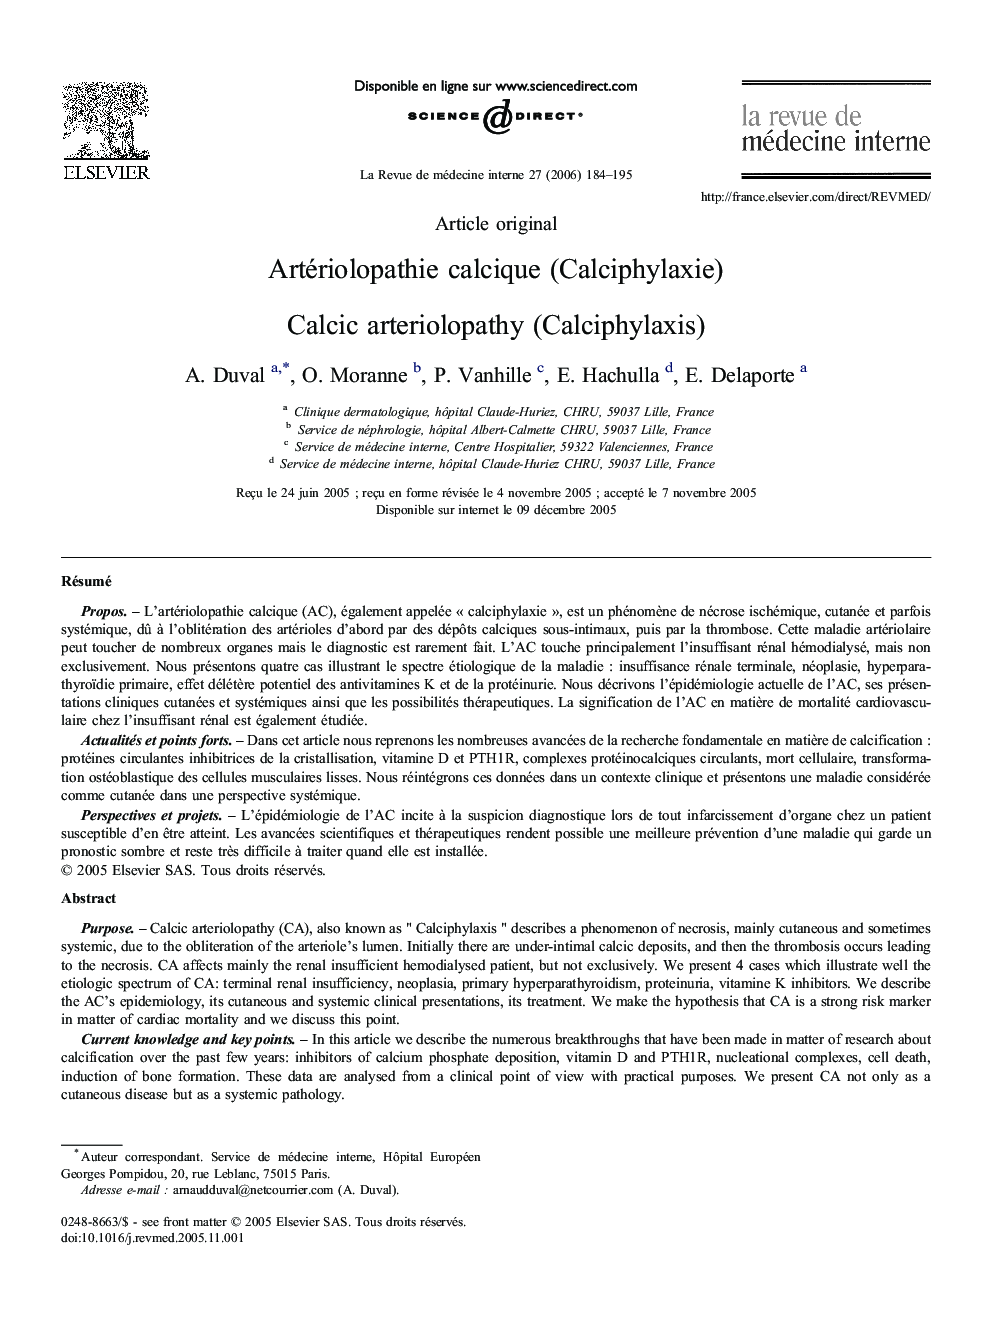 Artériolopathie calcique (Calciphylaxie)